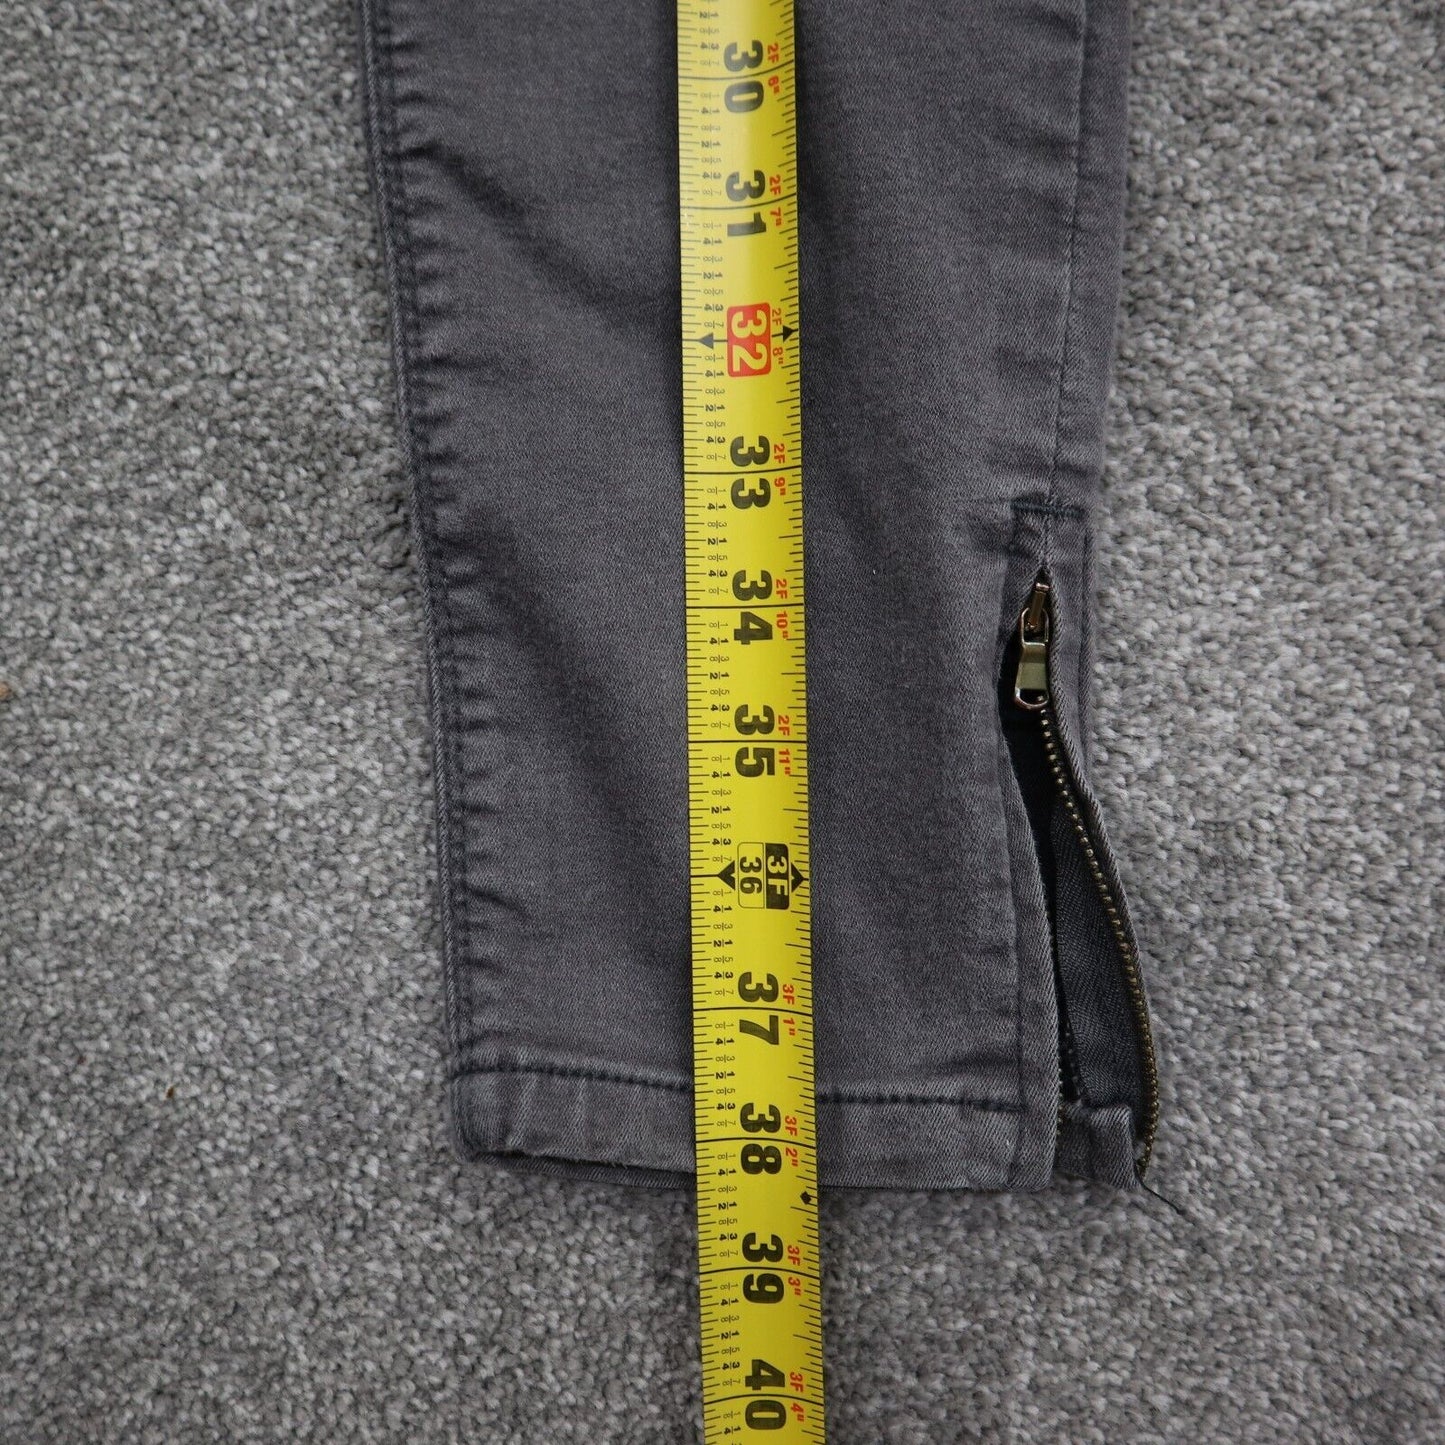 Zara Women Skinny Leg Jeans Denim Stretch High Rise 5 Pockets Black Size 42